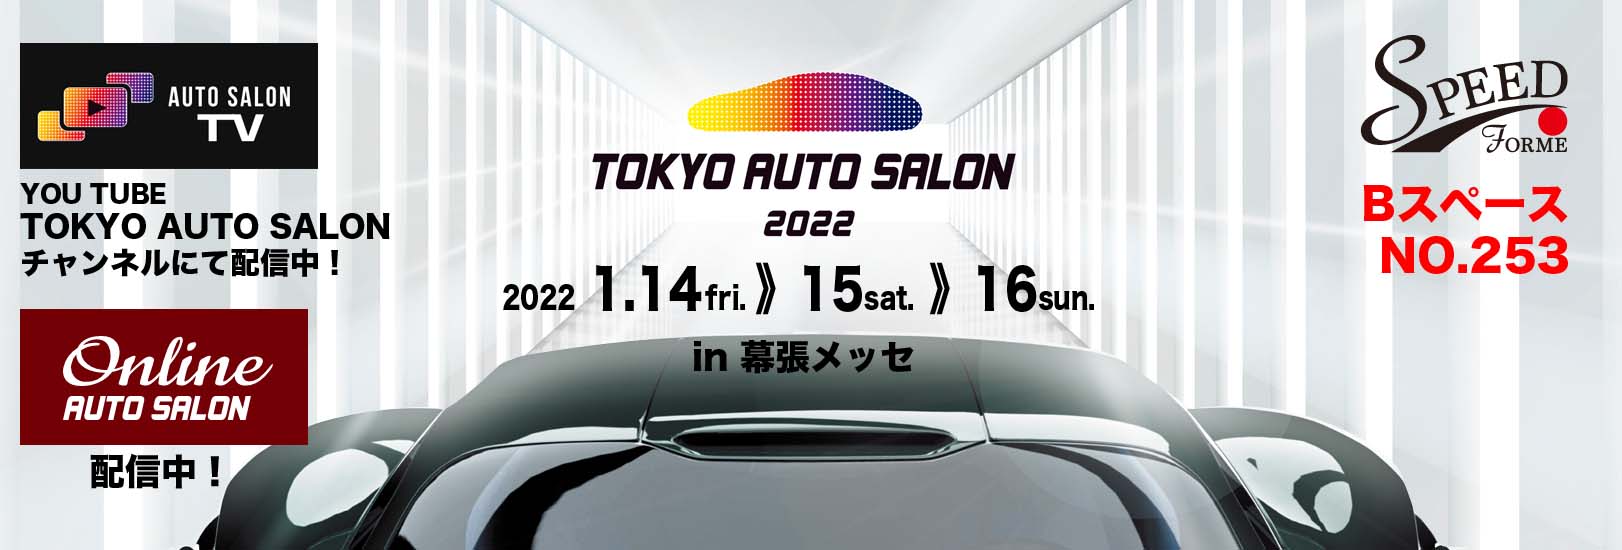 TOKYO AUTO SALON 2020 タイトル画像